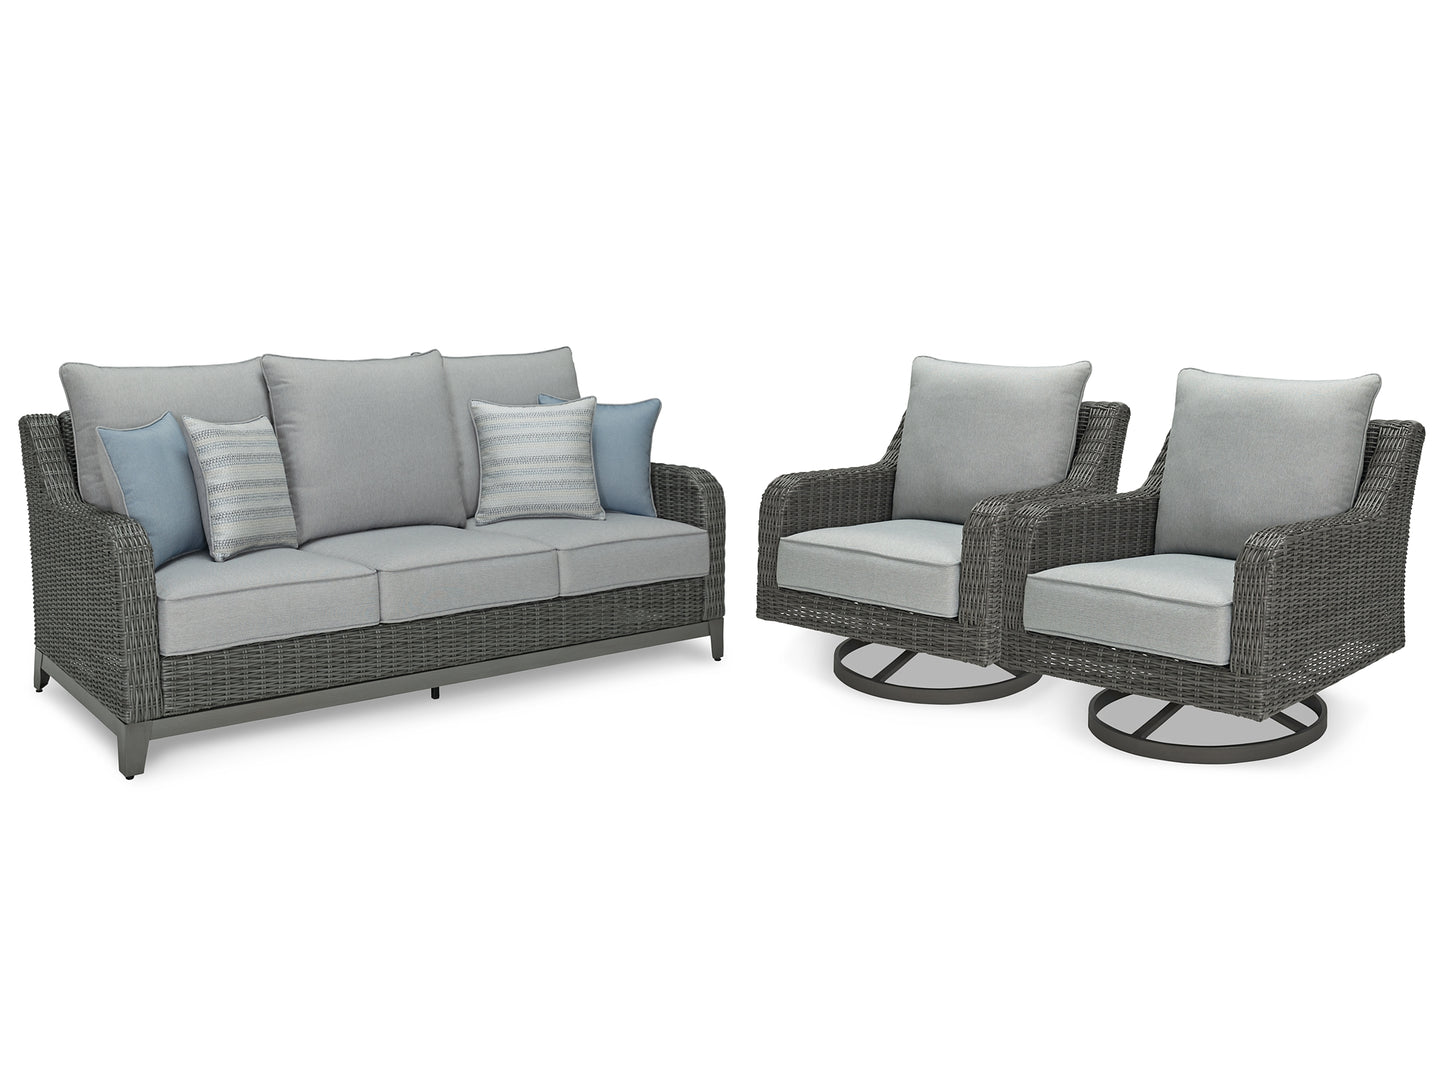 Elite Park Outdoor Sofa with 2 Lounge Chairs Wilson Furniture (OH)  in Bridgeport, Ohio. Serving Bridgeport, Yorkville, Bellaire, & Avondale